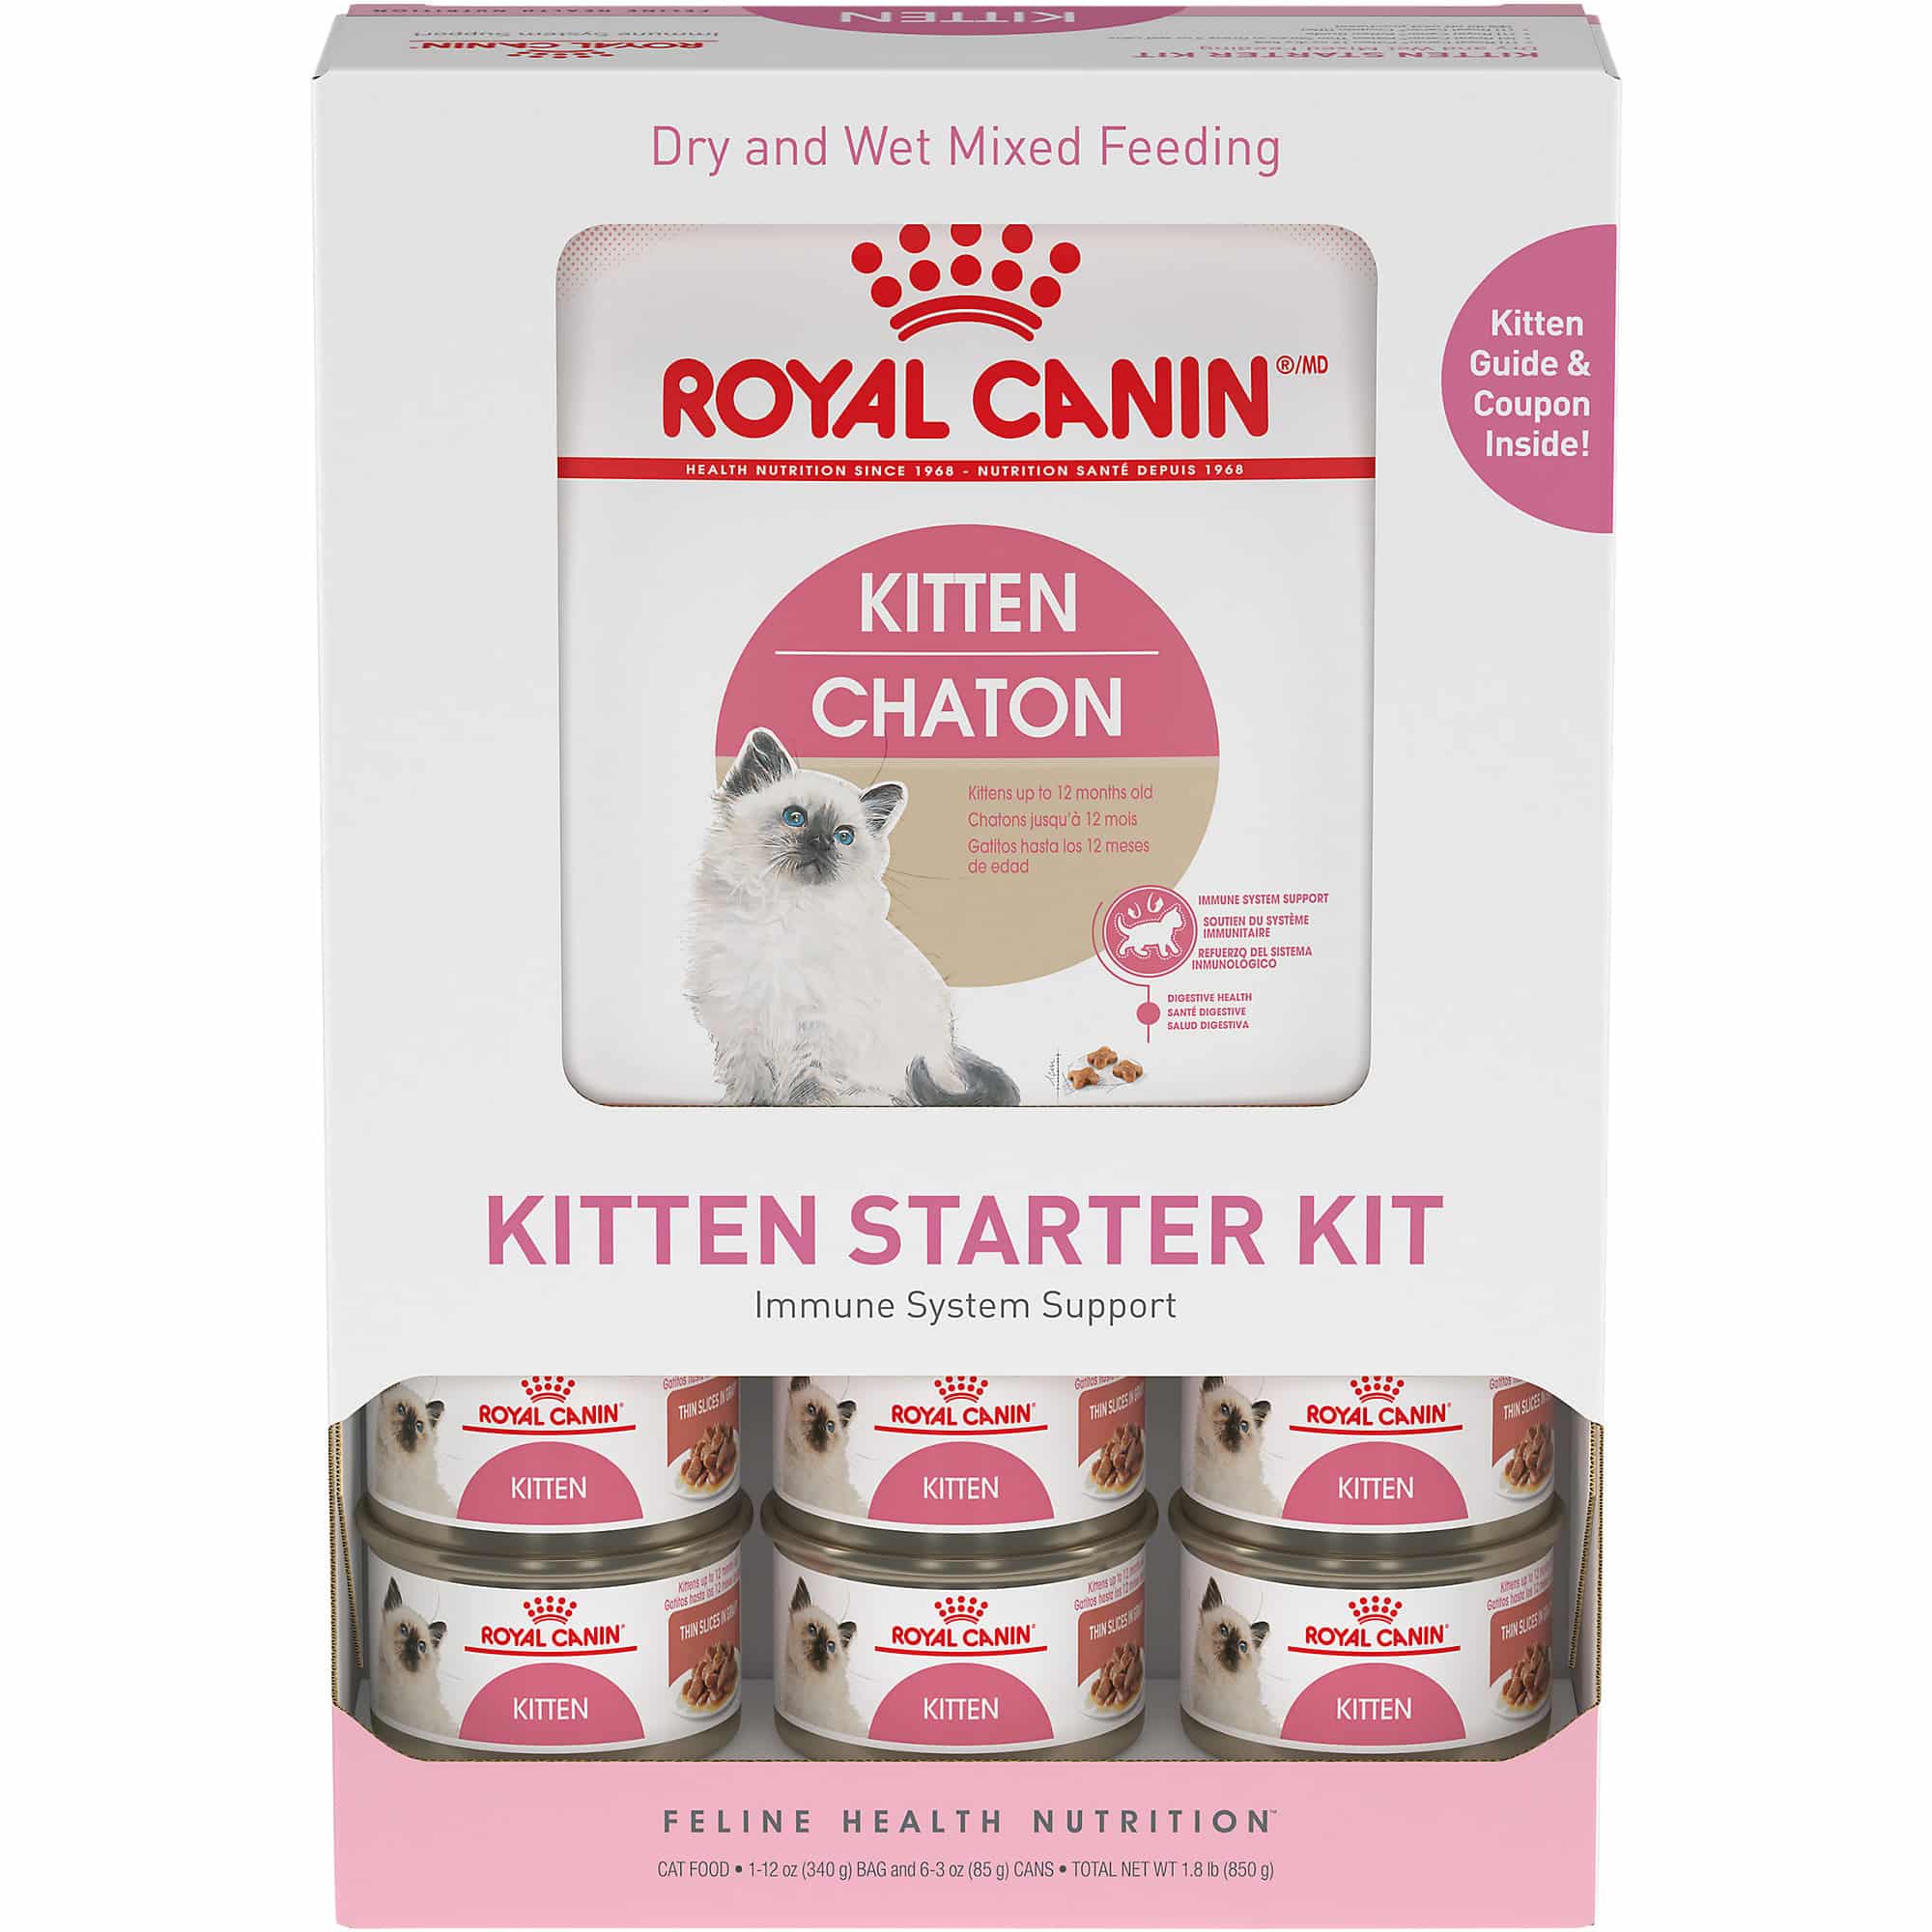 Royal Canin Kitten Mixed Feeding Starter Kit